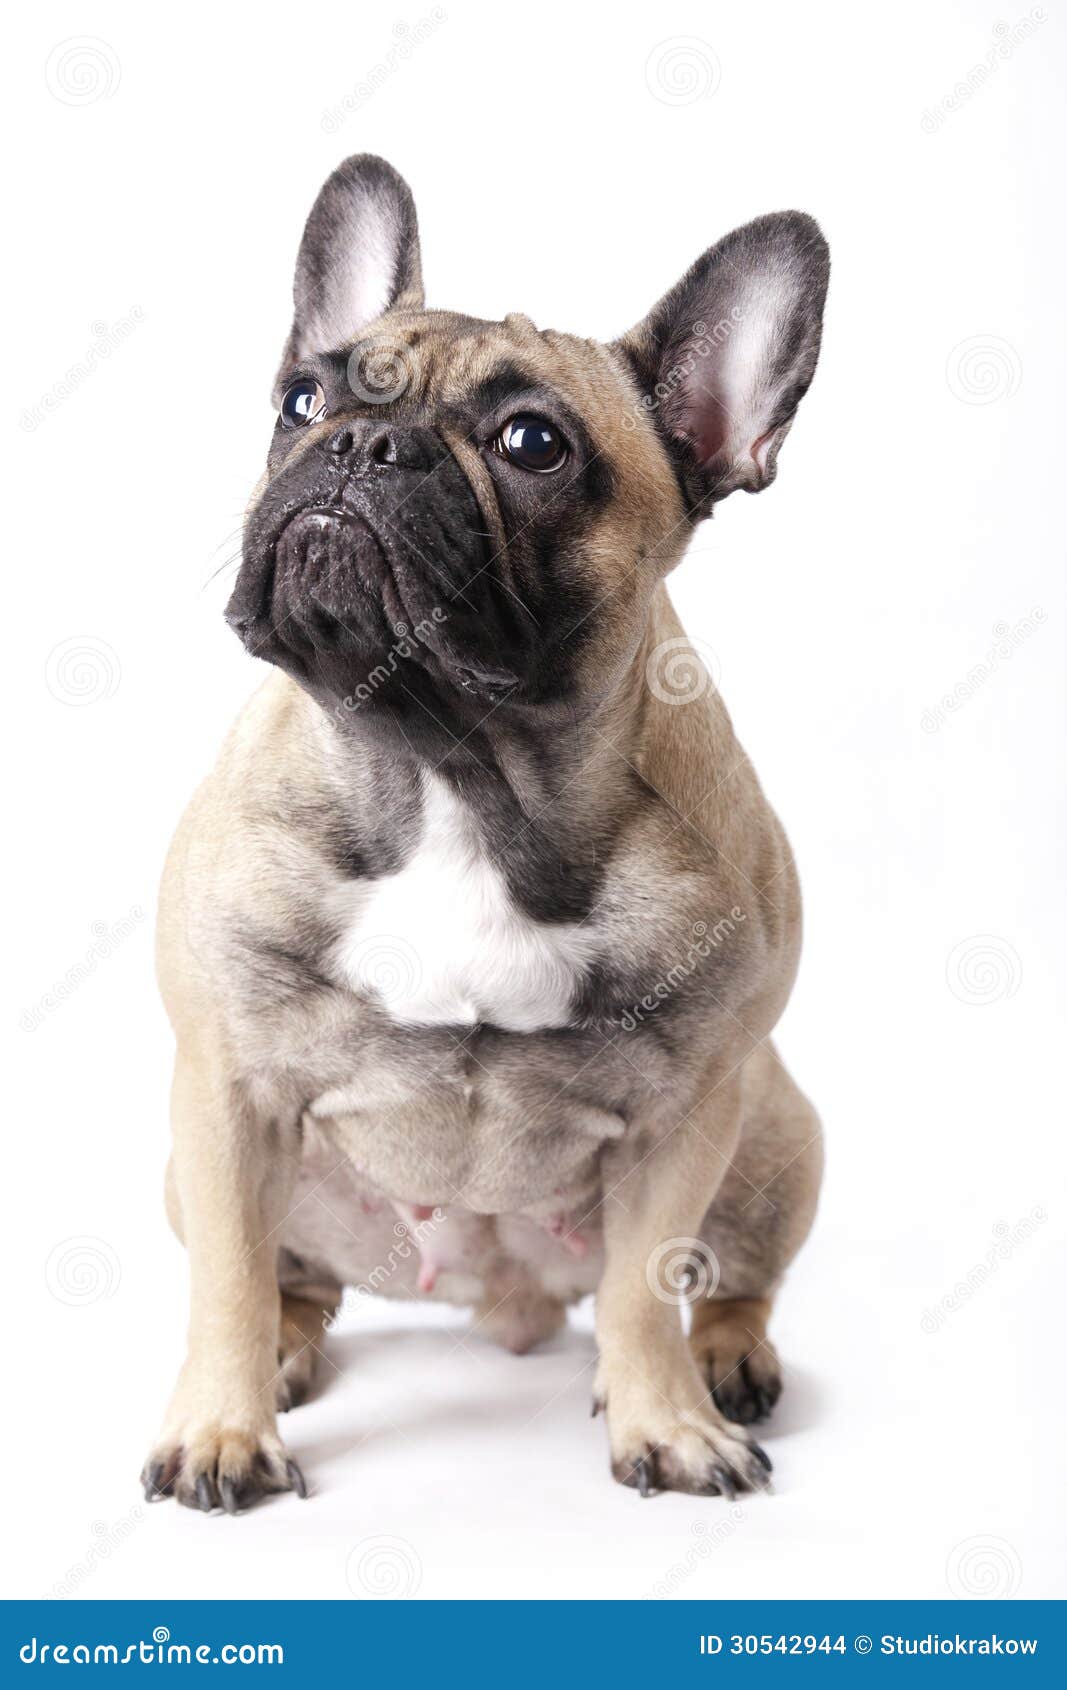 Sitting French bulldog stock photo. Image of wide, domestic - 30542944